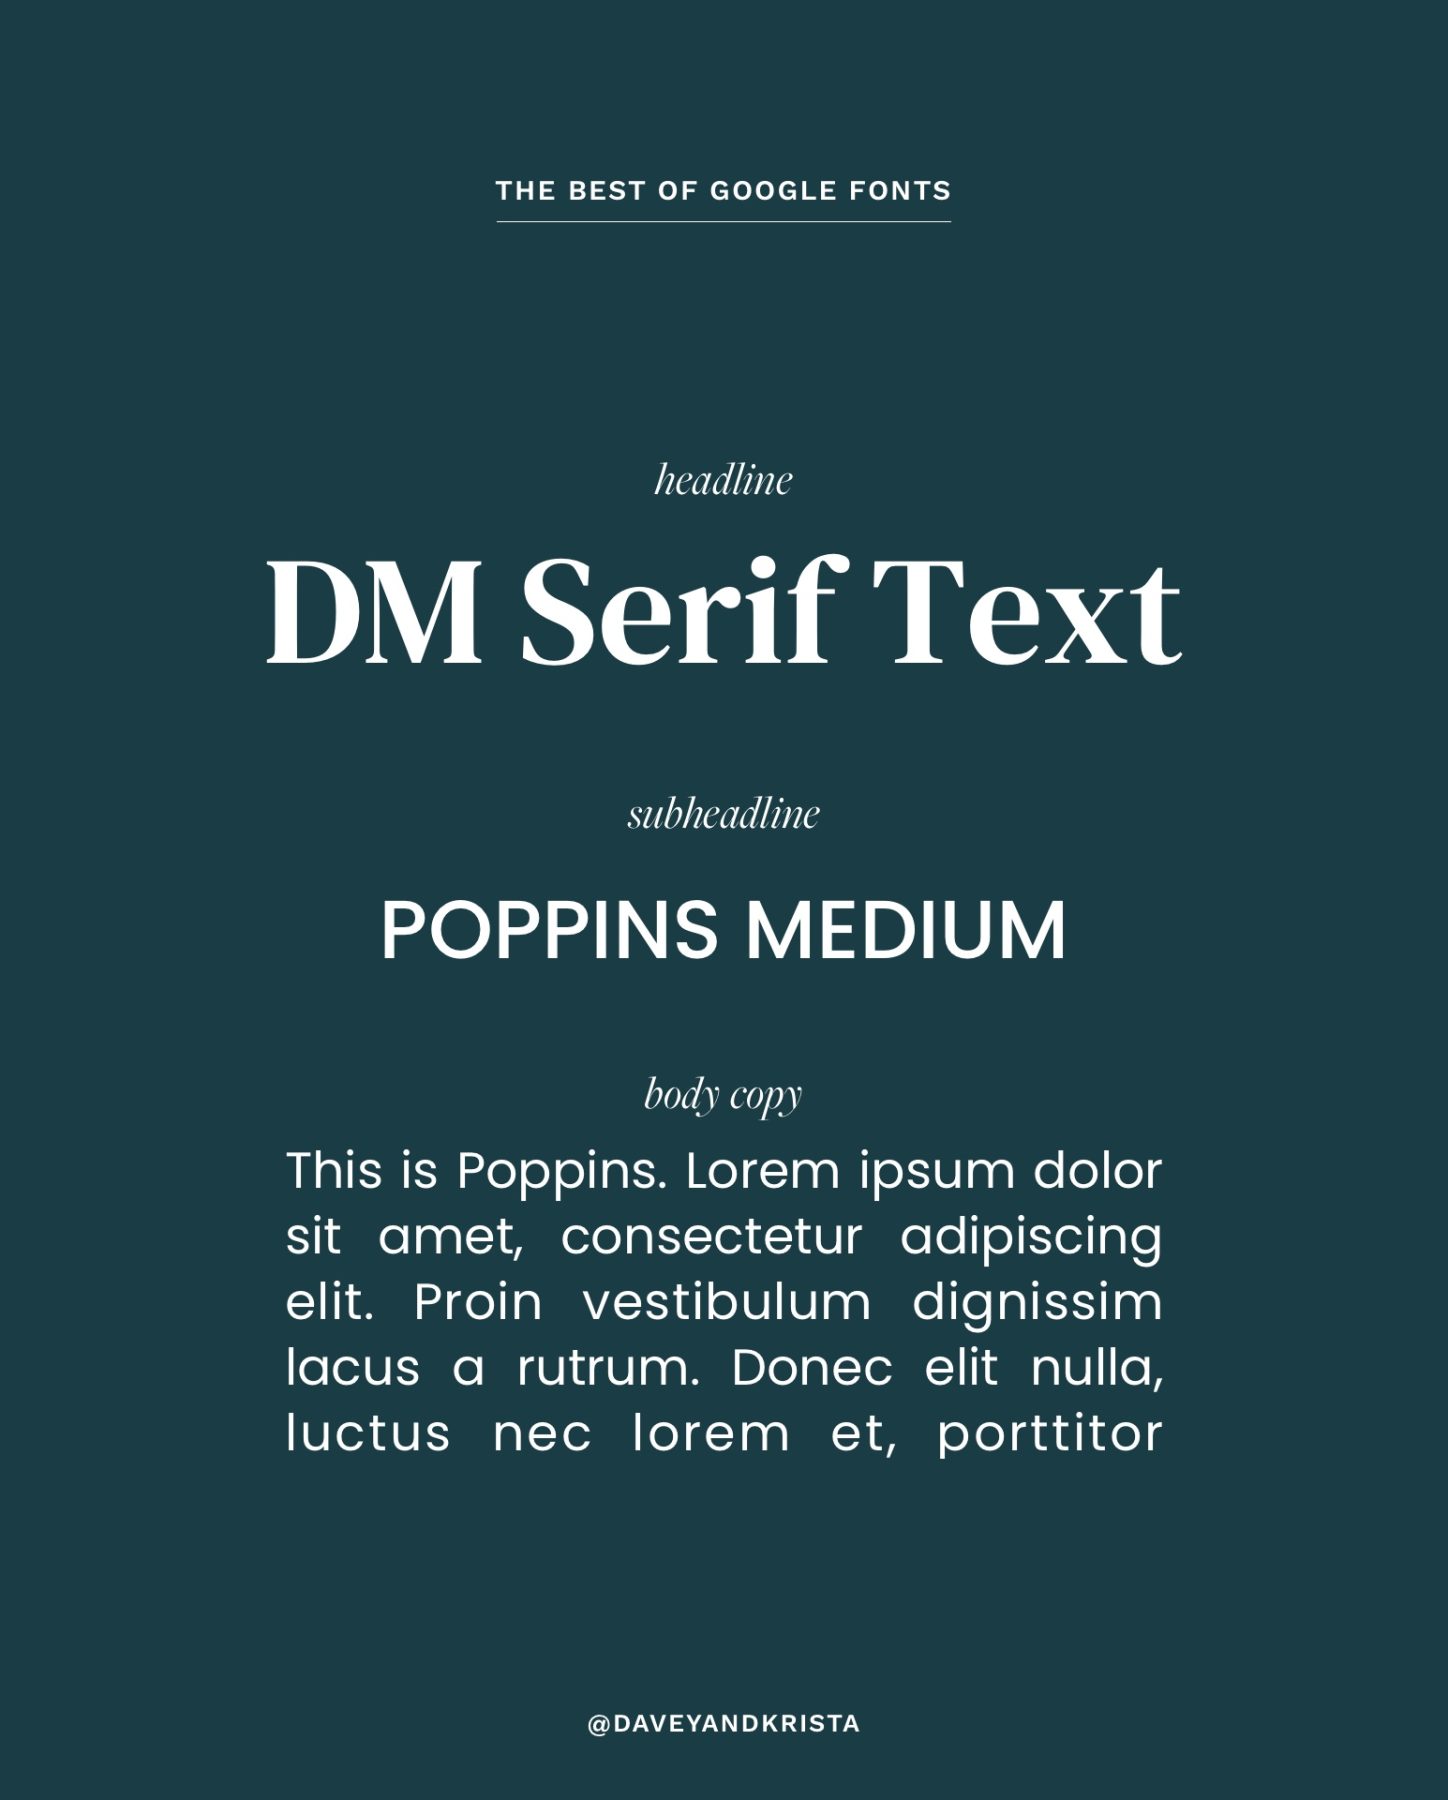 The best of Google Fonts: DM Serif Text + Poppins | Via Davey & Krista
